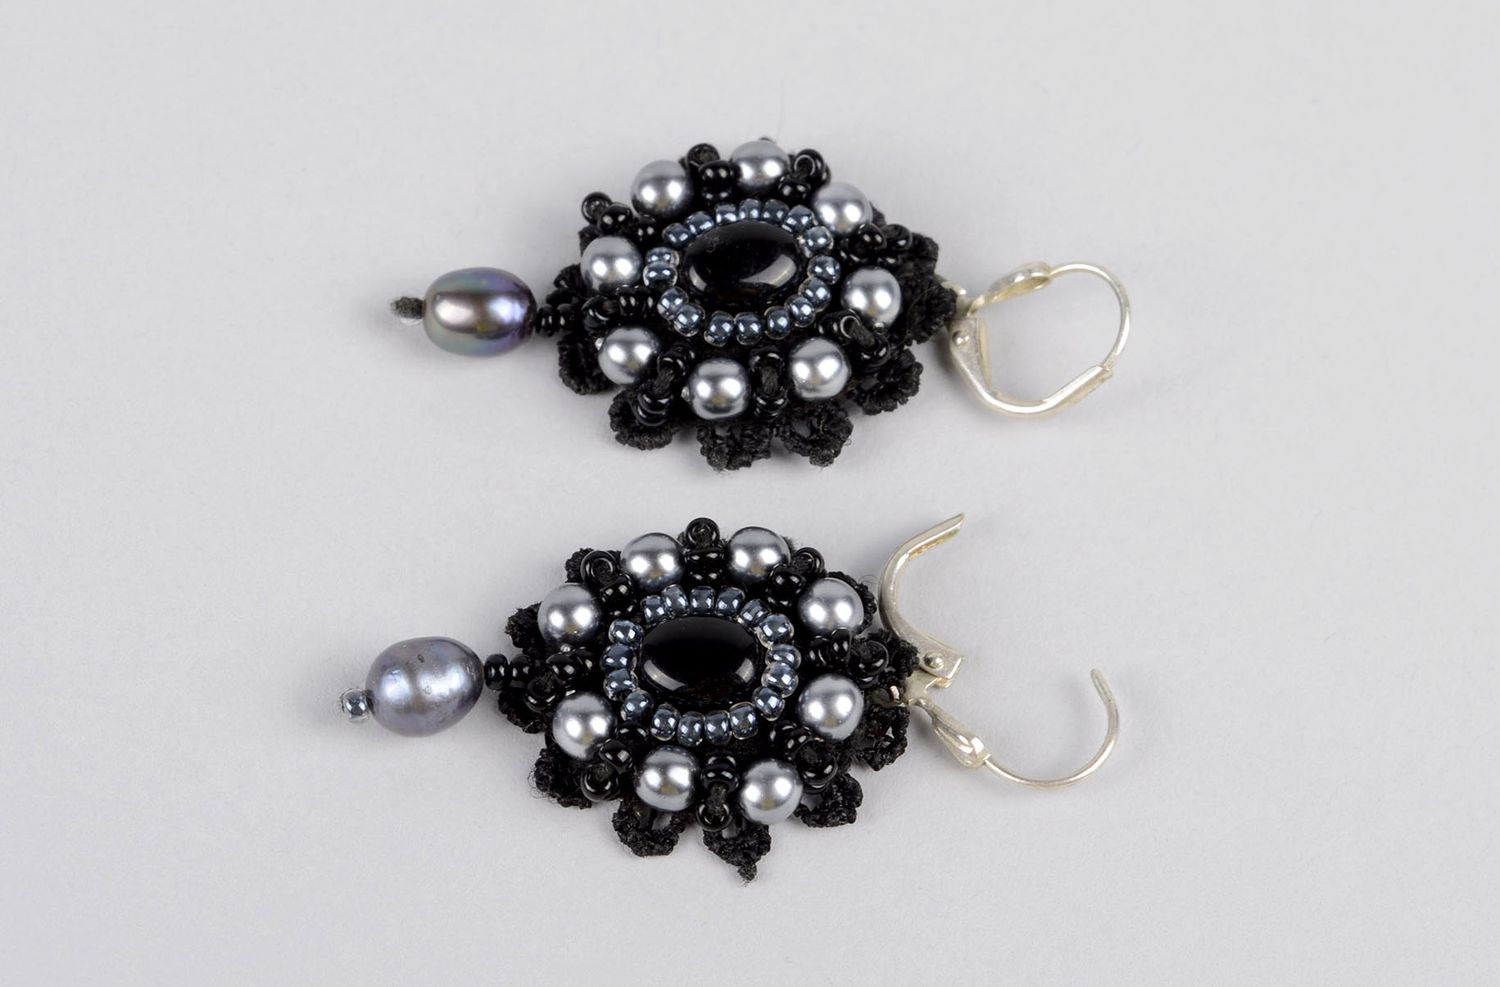 Handmade beaded earrings with charms long earrings with beads fashion jewelry photo 3